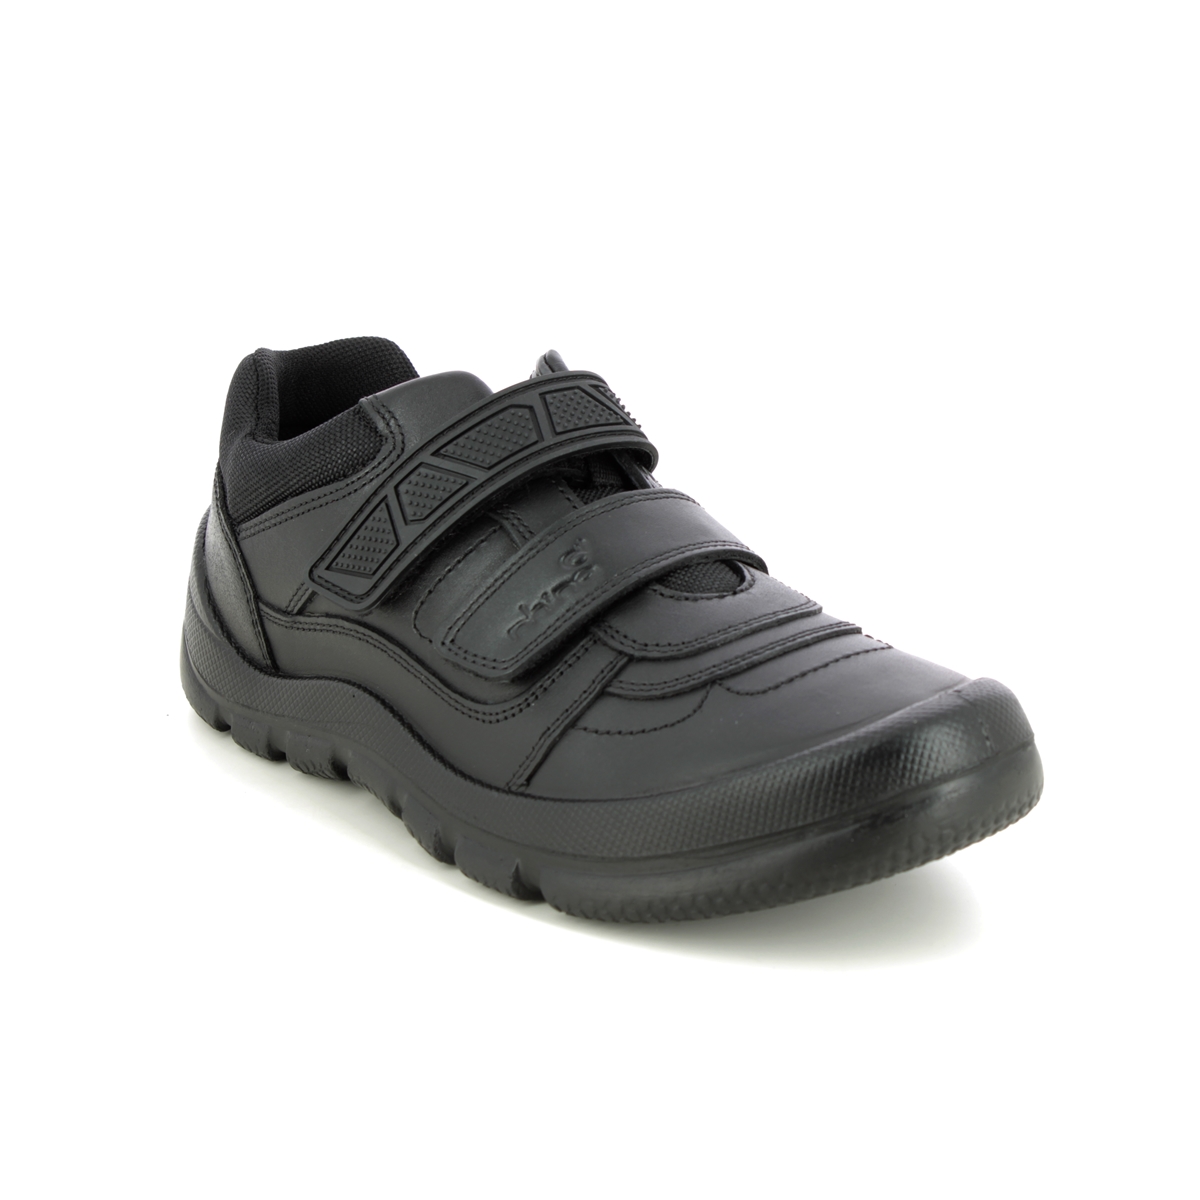 Start Rite - Rhino Warrior In Black Leather 8237-76F In Size 4 In Plain Black Leather For School Boys Shoes  In Black Leather For kids